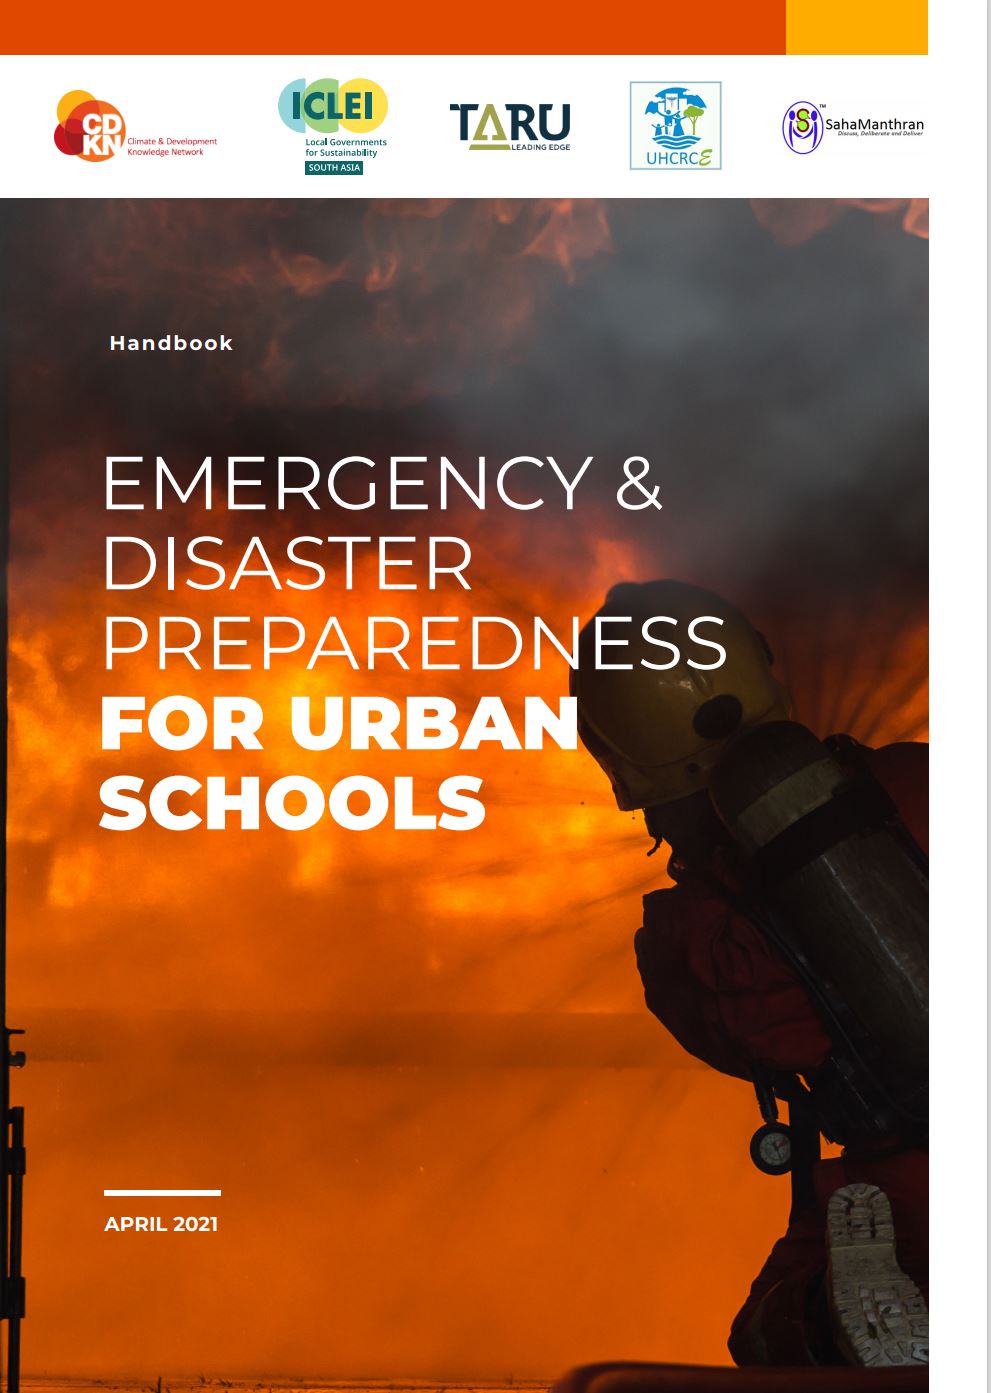 Handbook for Emergency & Disaster Preparedness for Urban Schools